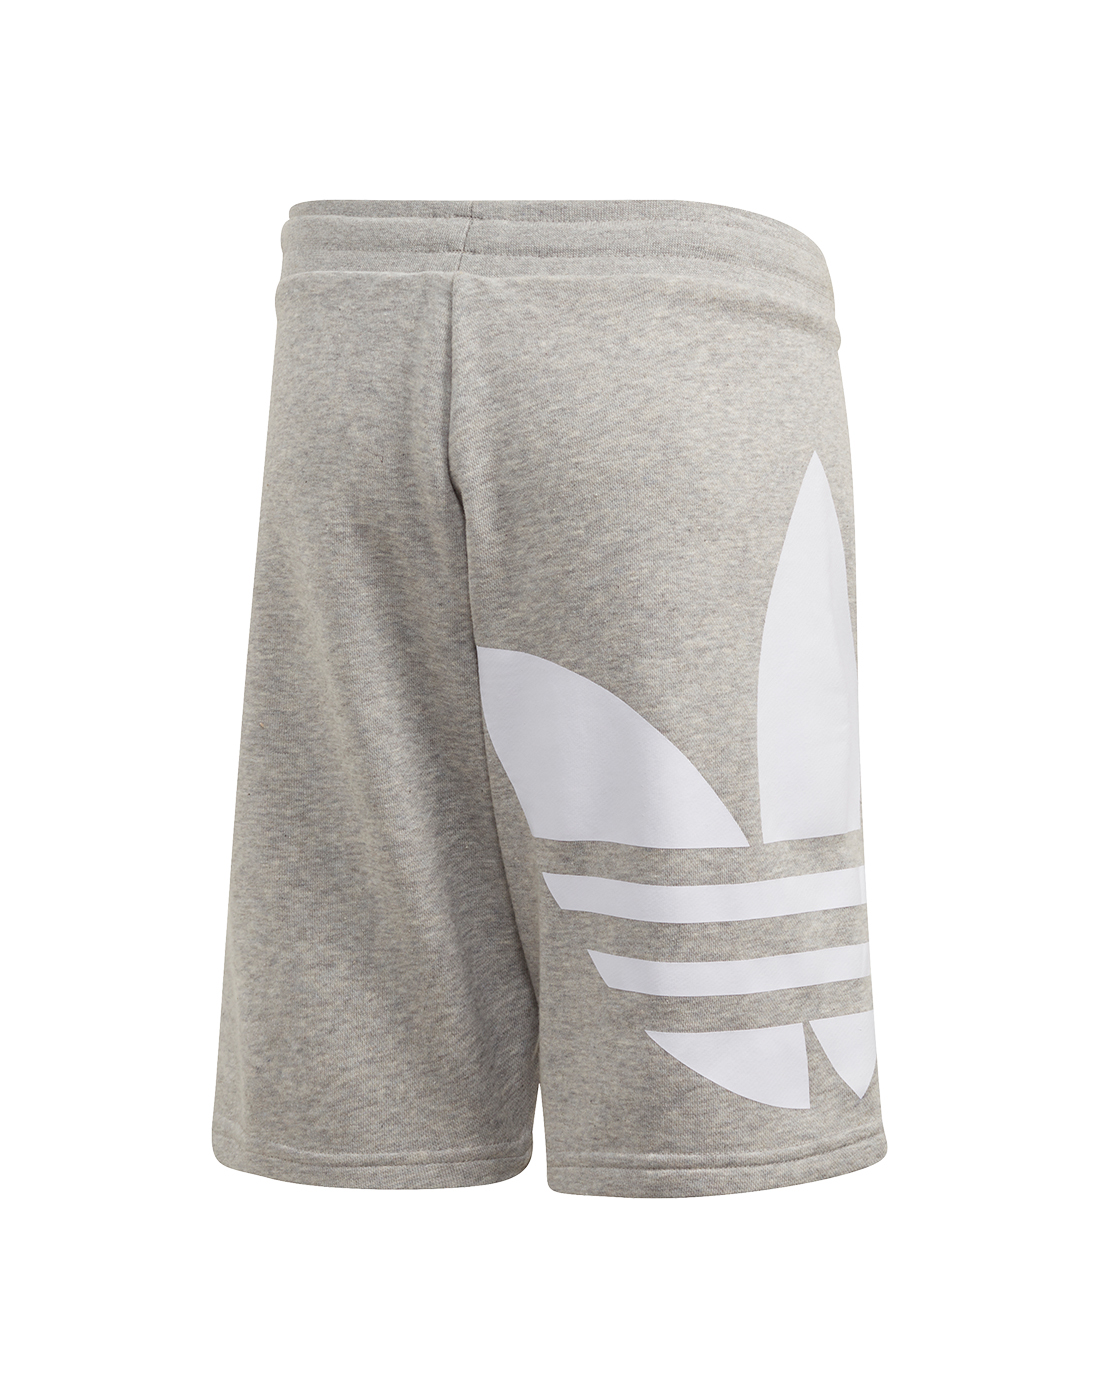 adidas Originals Older Boys Trefoil Shorts - Grey | Life Style Sports IE